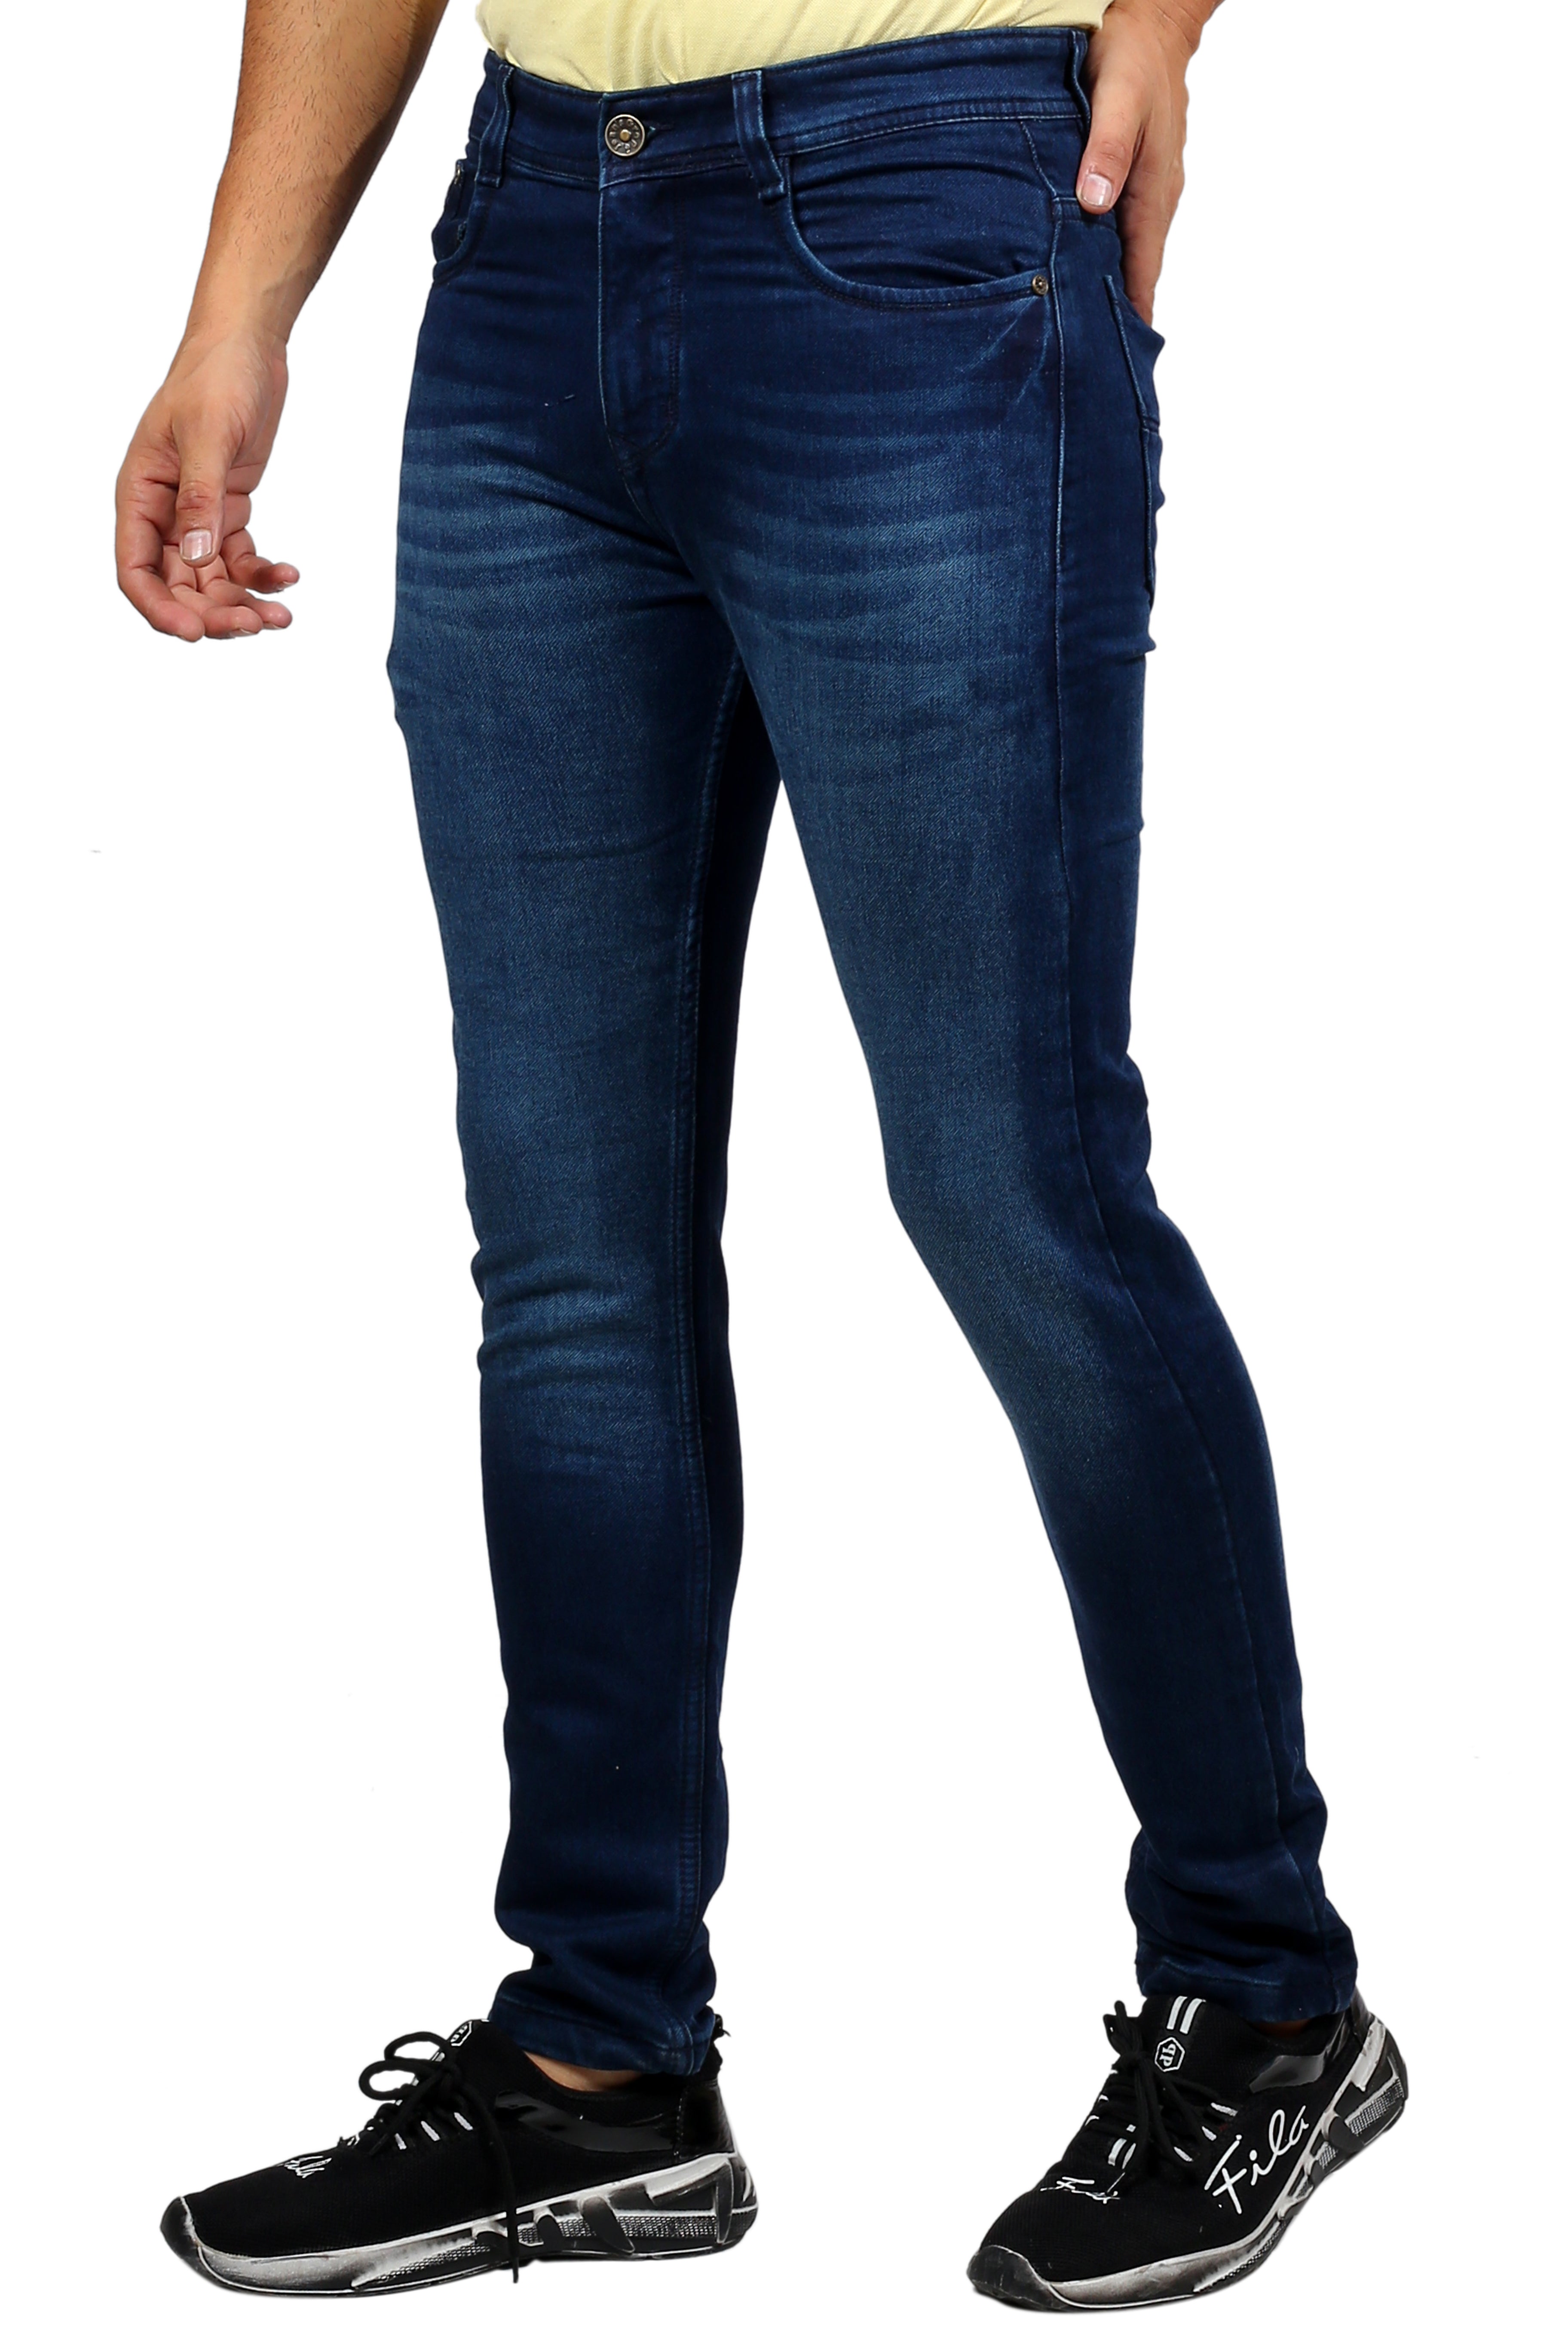 Detec™ Grapejeans Slim Fit Men's Denim Jean (Blue Jeans)Detec™ Grapejeans Slim Fit Men's Denim Jean (Blue Jeans)